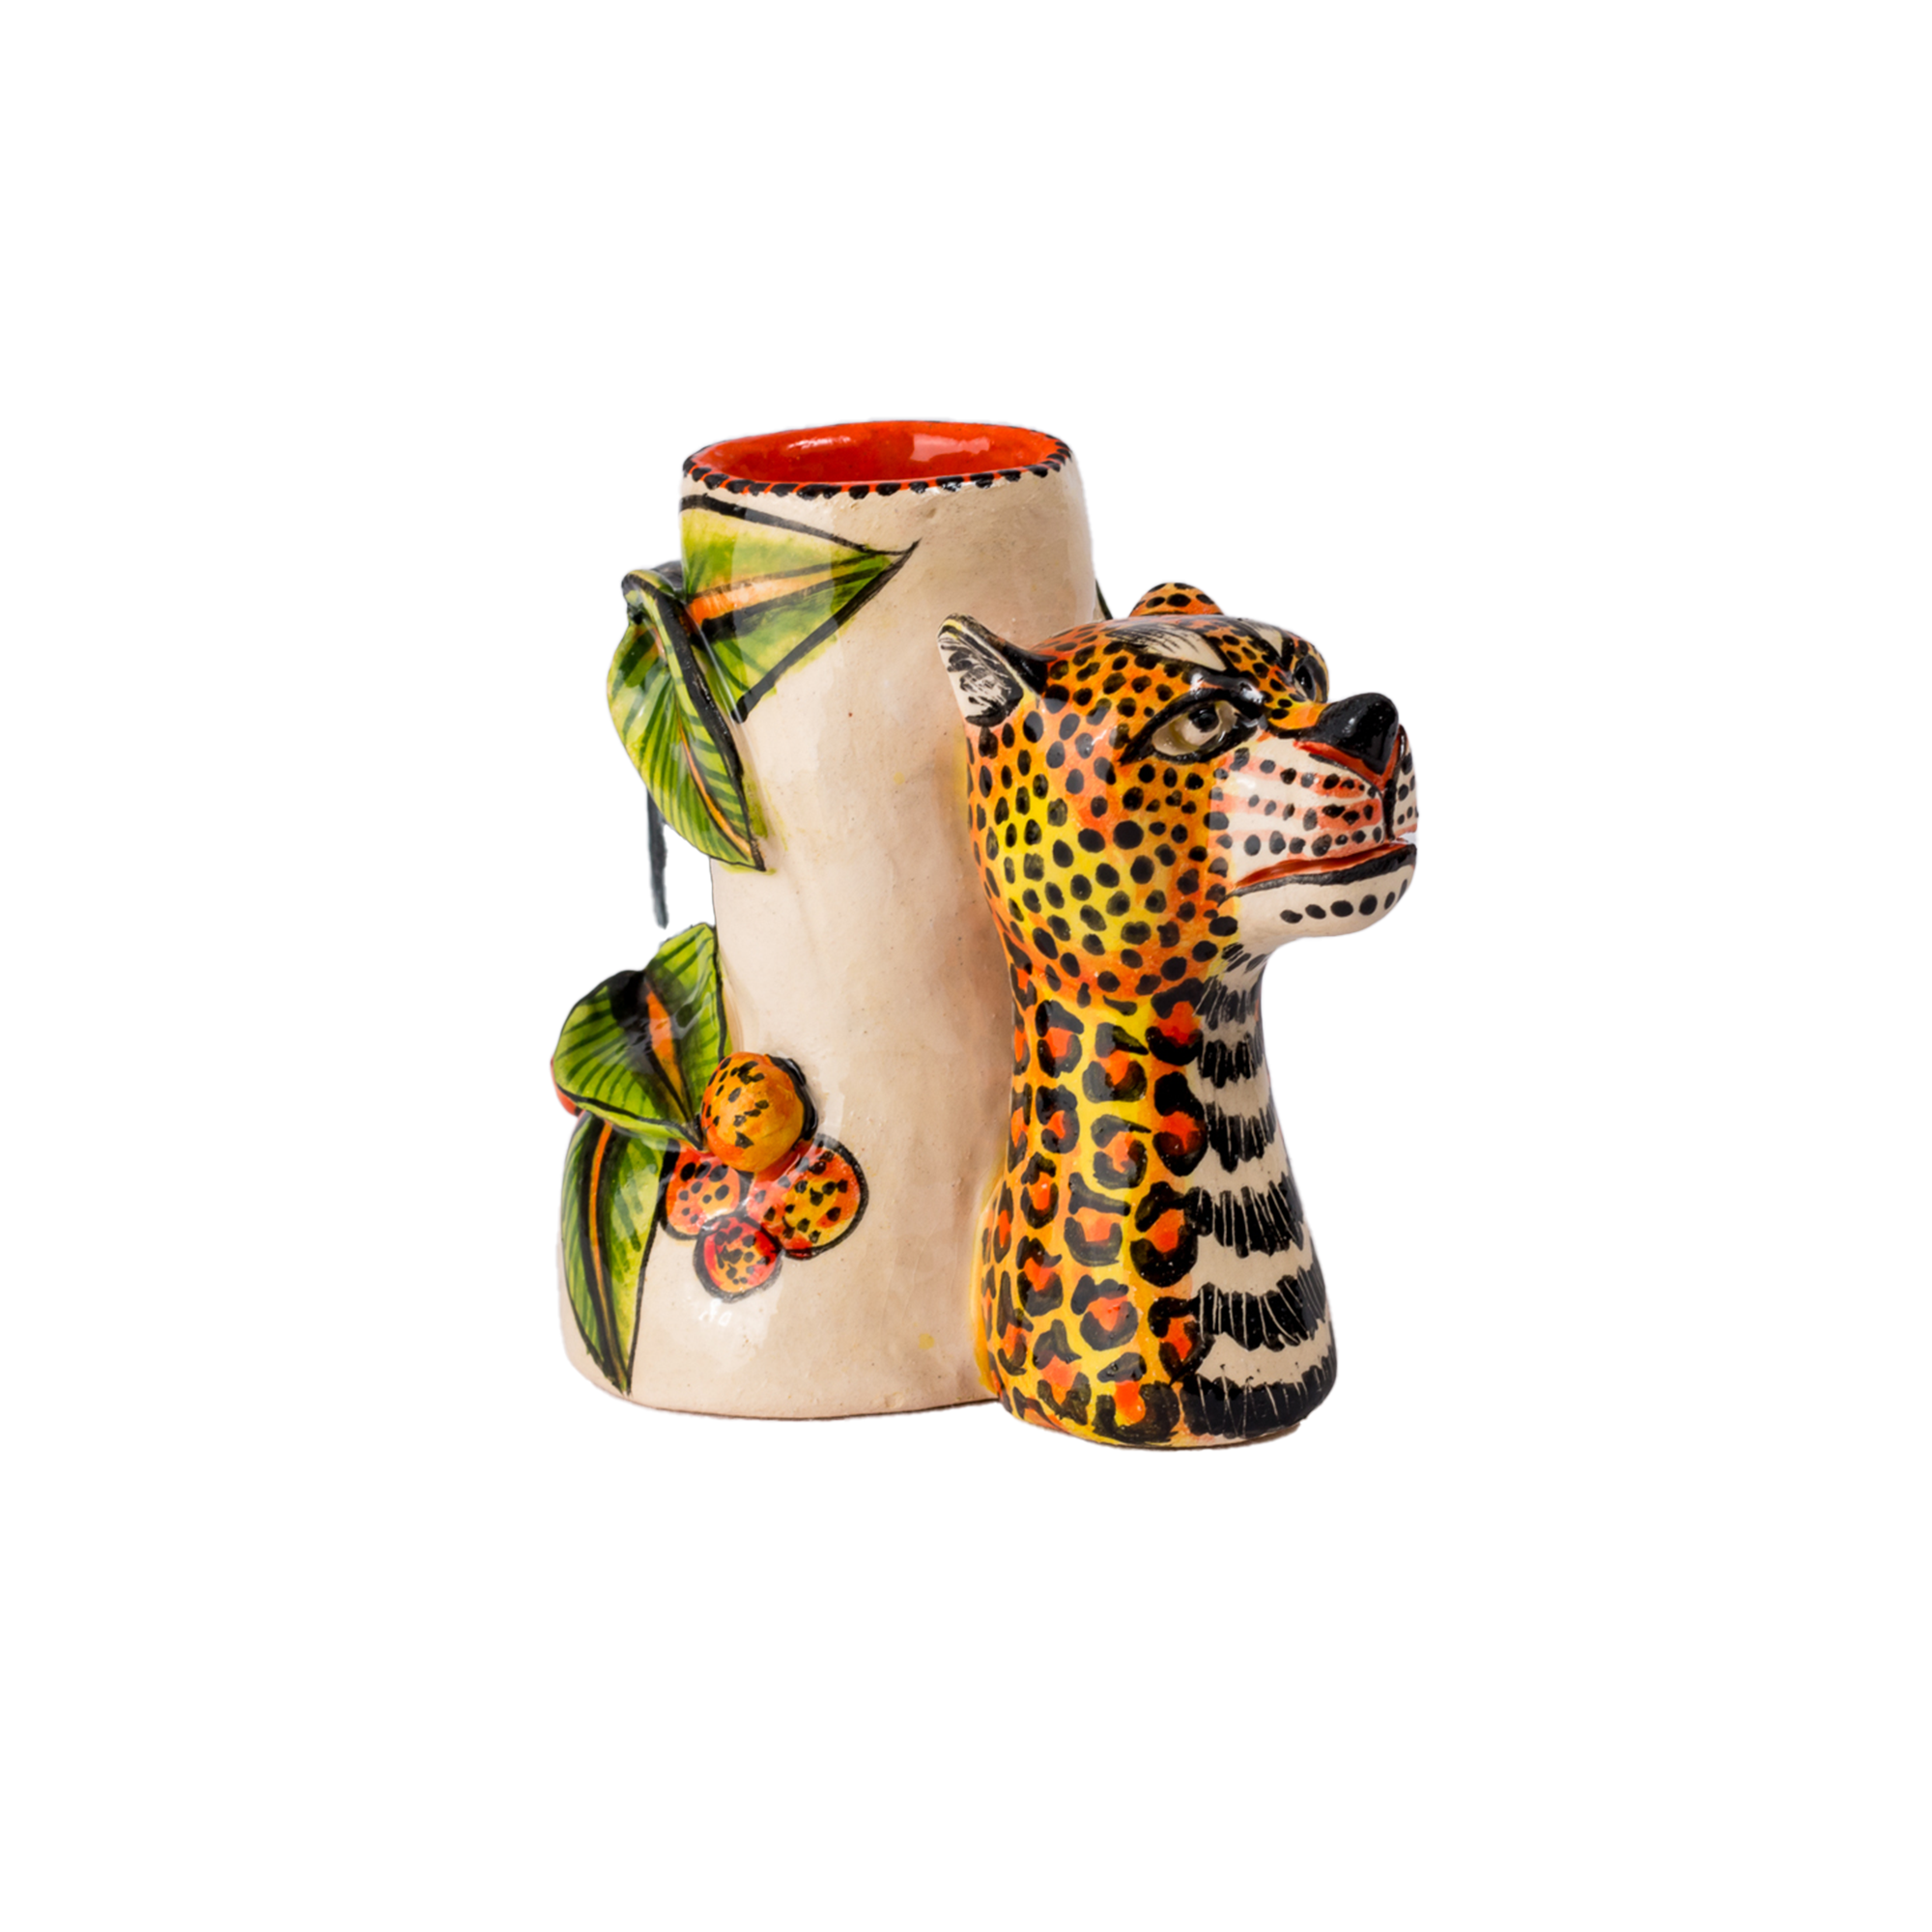 3D Ceramic Cheetah Candle Holder